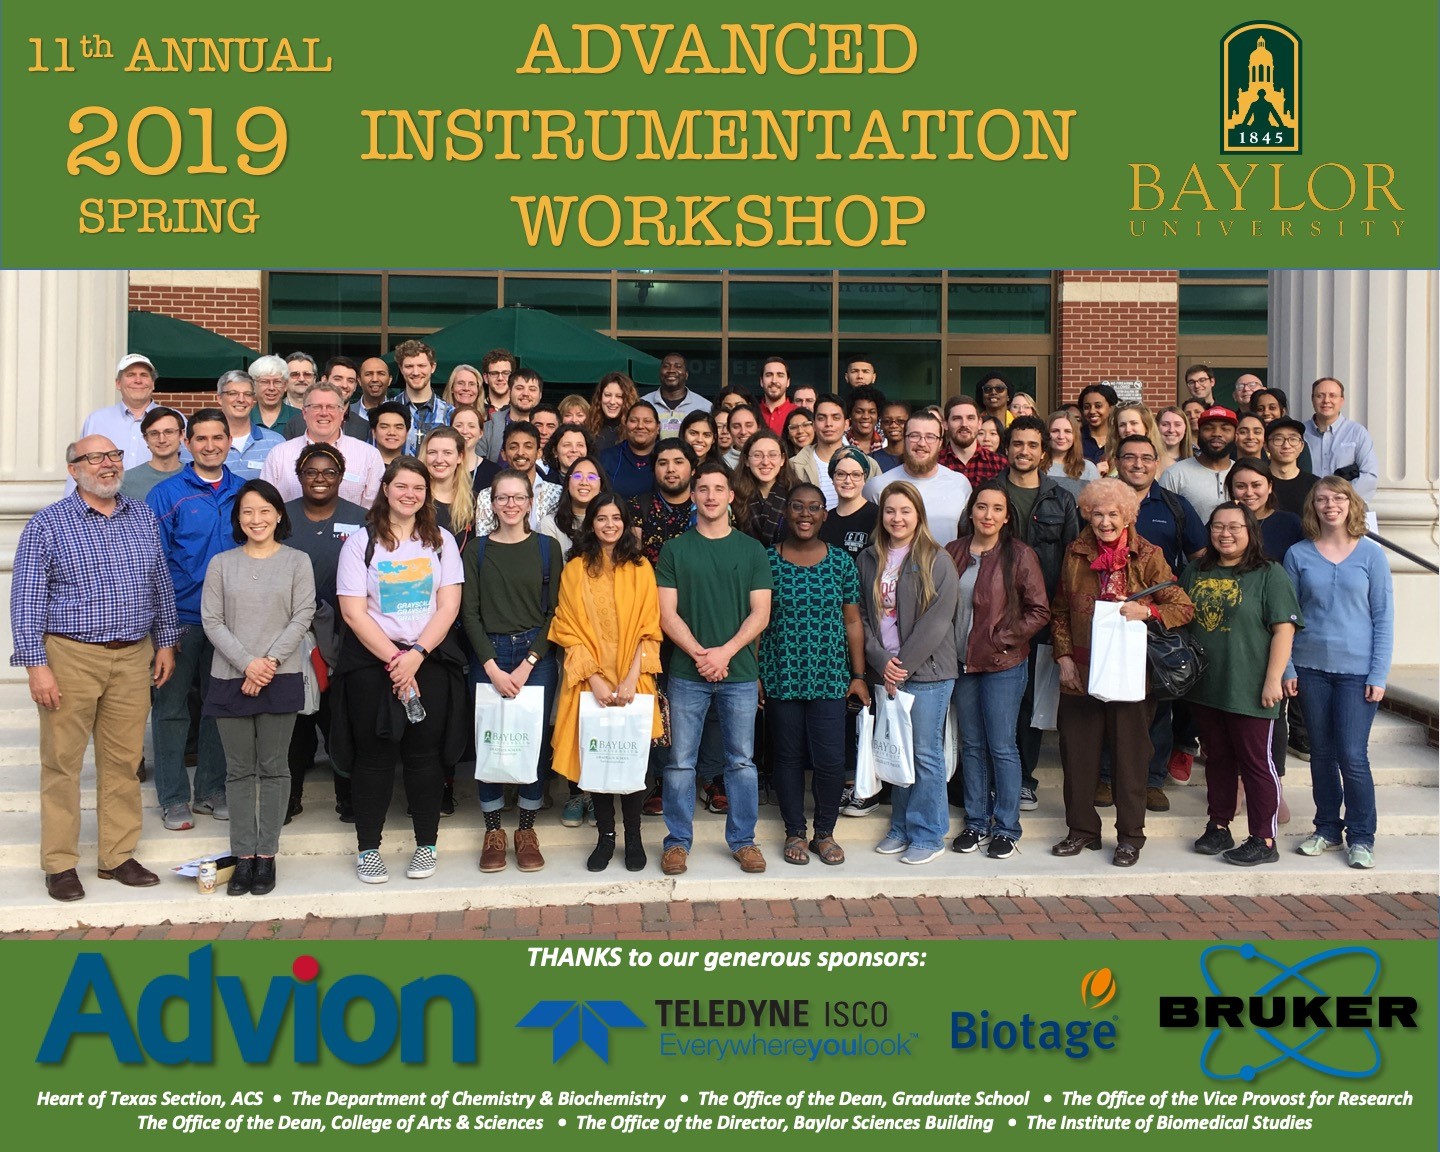 Spring 2019 Advanced Instrumentation Workshop Group Photo